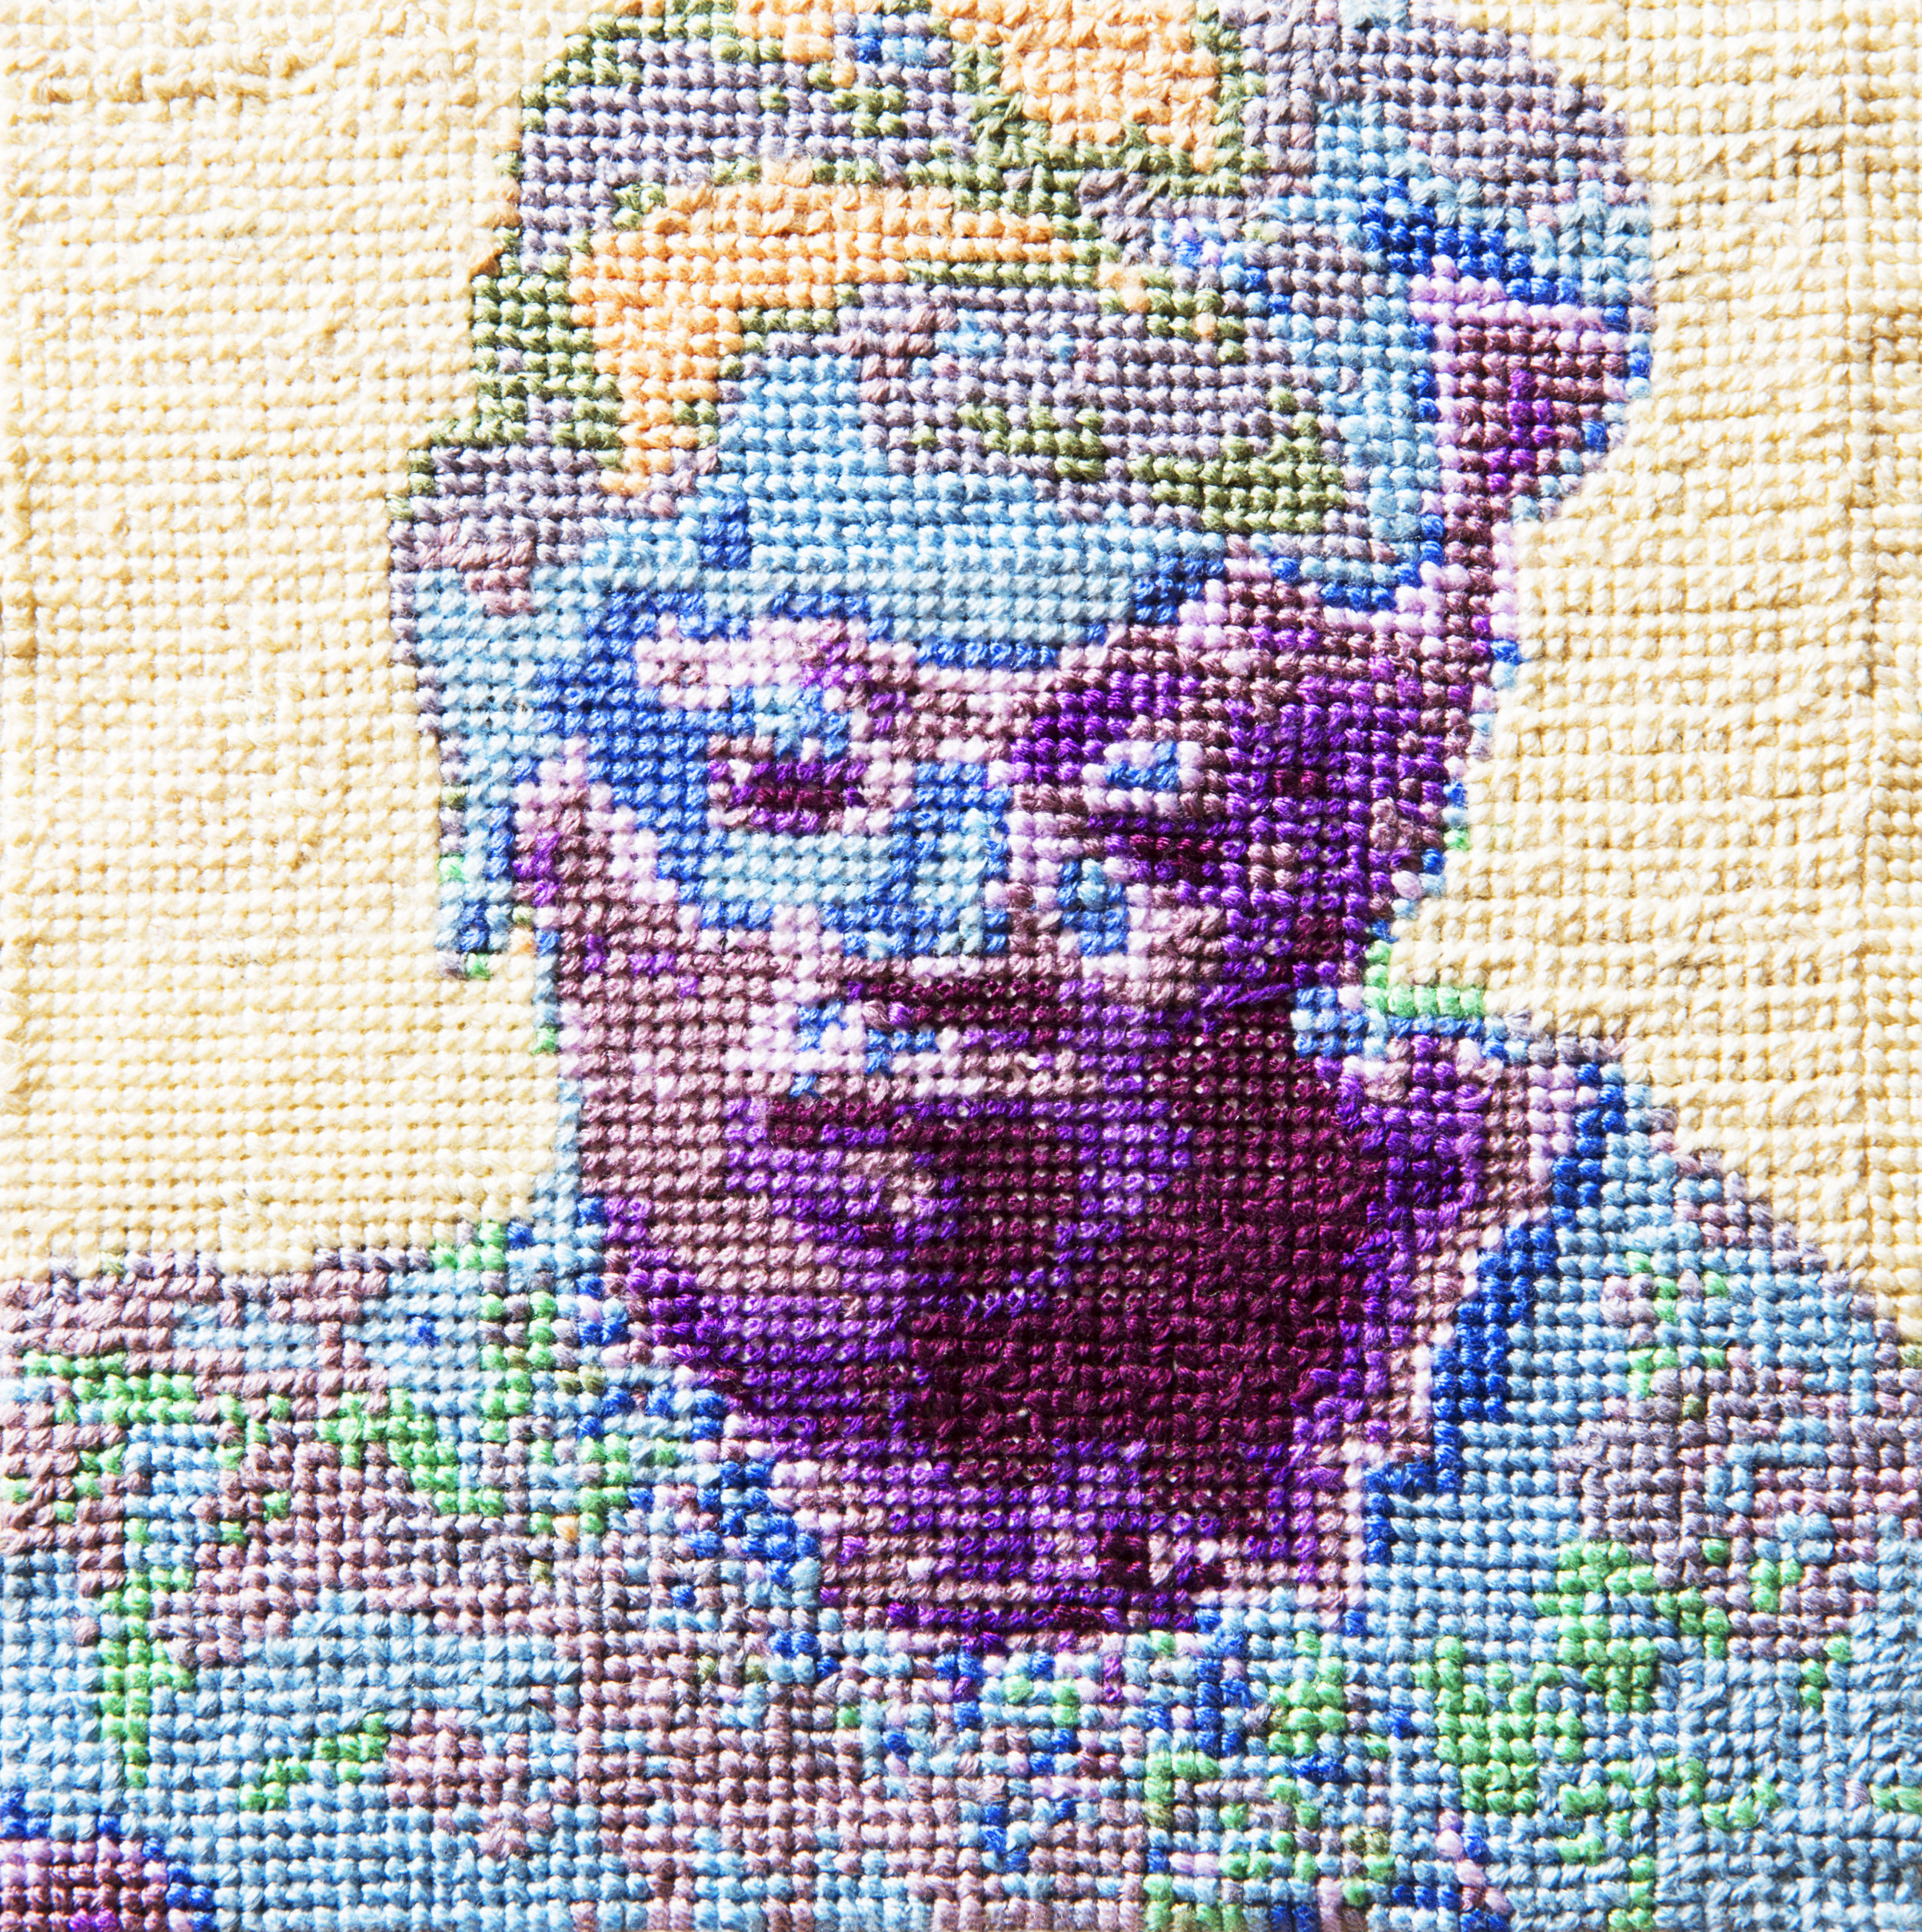   Frame 09   By Andre Keichian  5 x 5 inches  Cotton thread on aida cloth  2013 